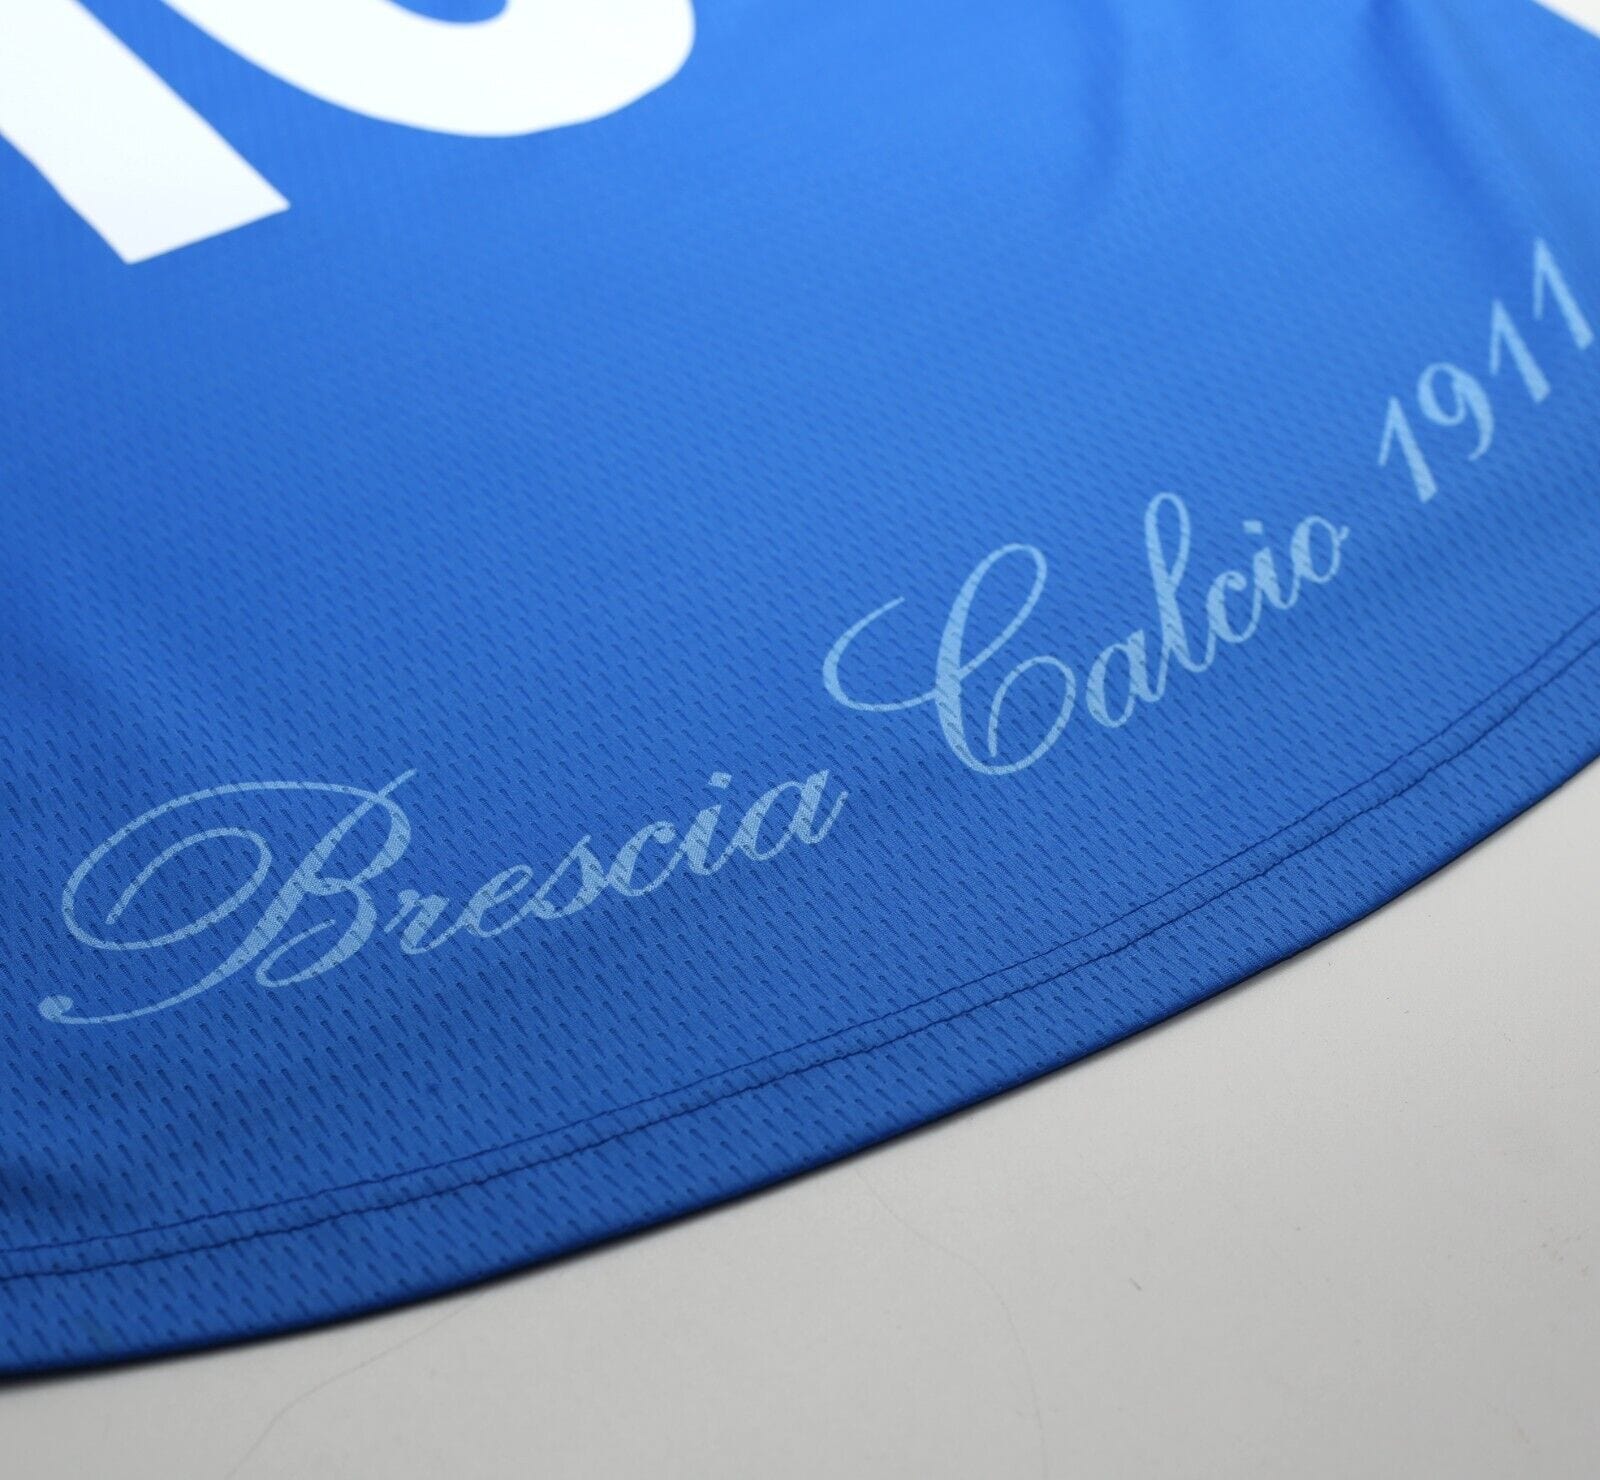 2000/01 BAGGIO #10 BRESCIA Vintage Garman Long Sleeve Home Football Shirt (M)